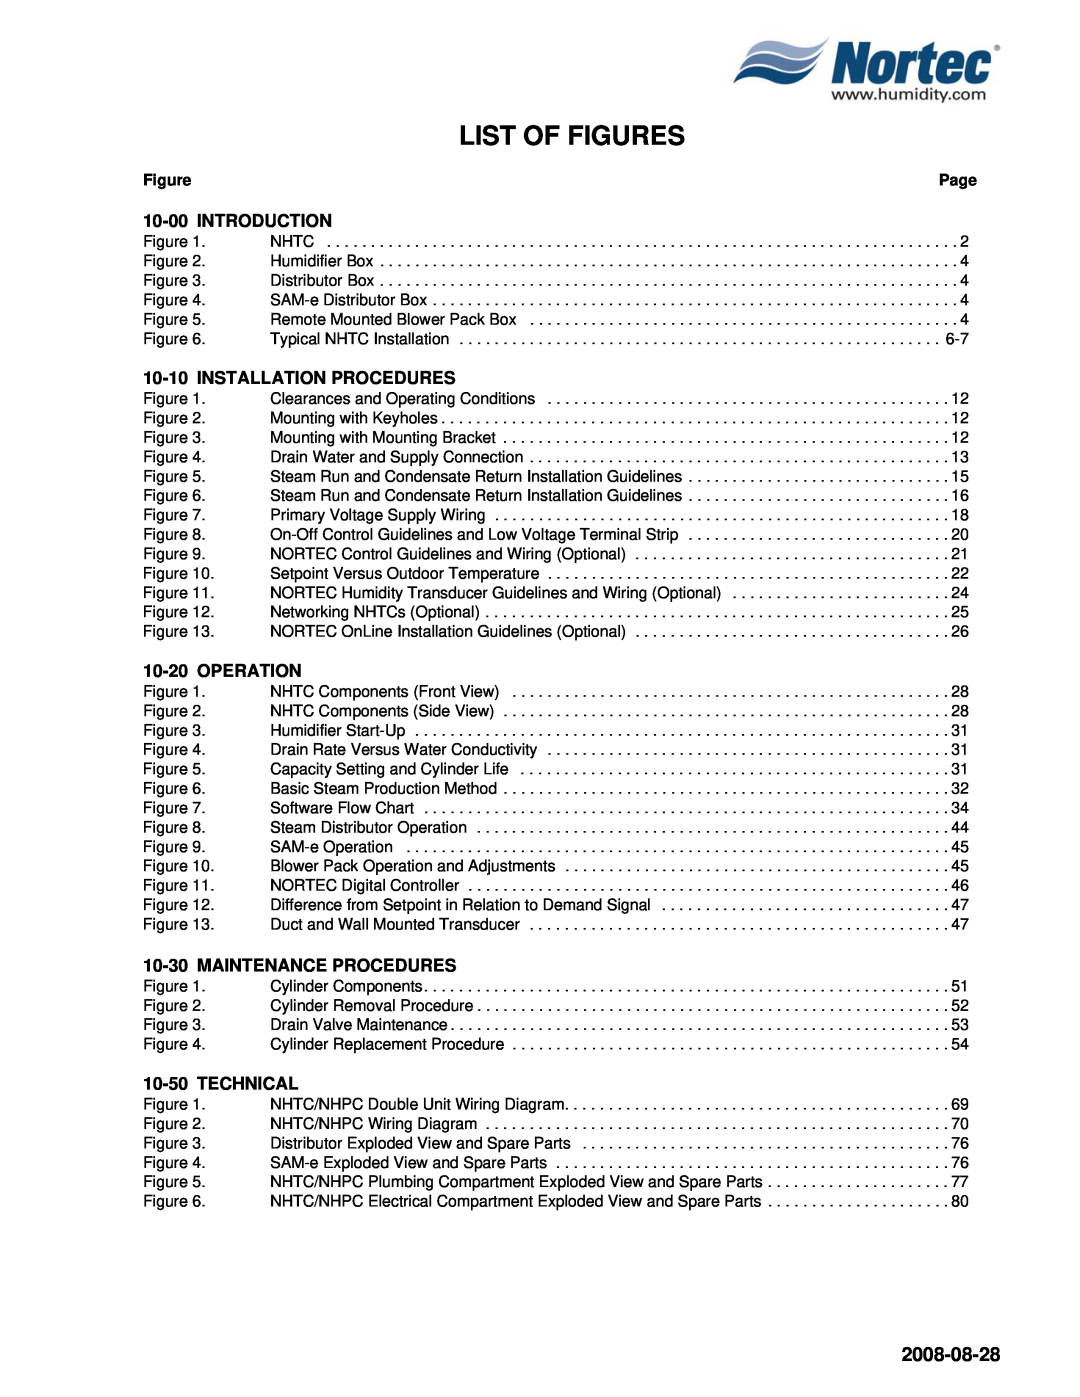 Nortec NH Series installation manual List Of Figures, 2008-08-28 